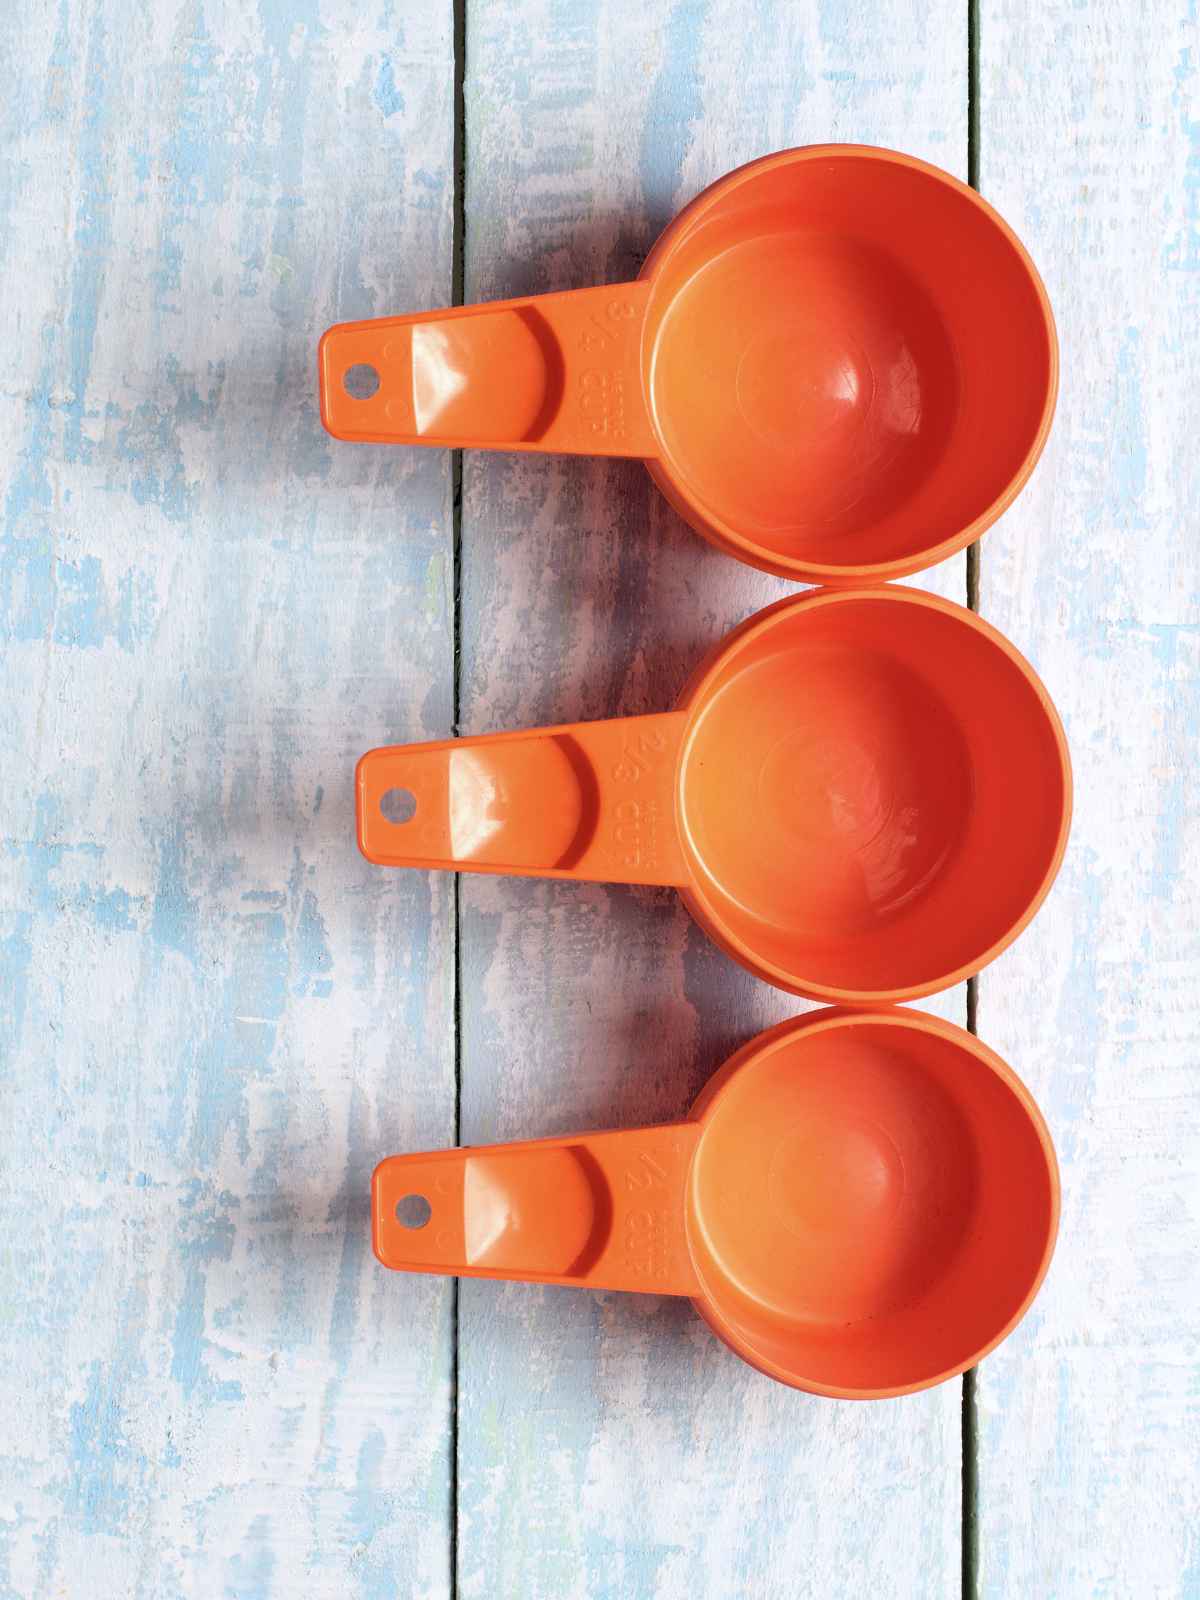 orange color measuring cups on a blue background.